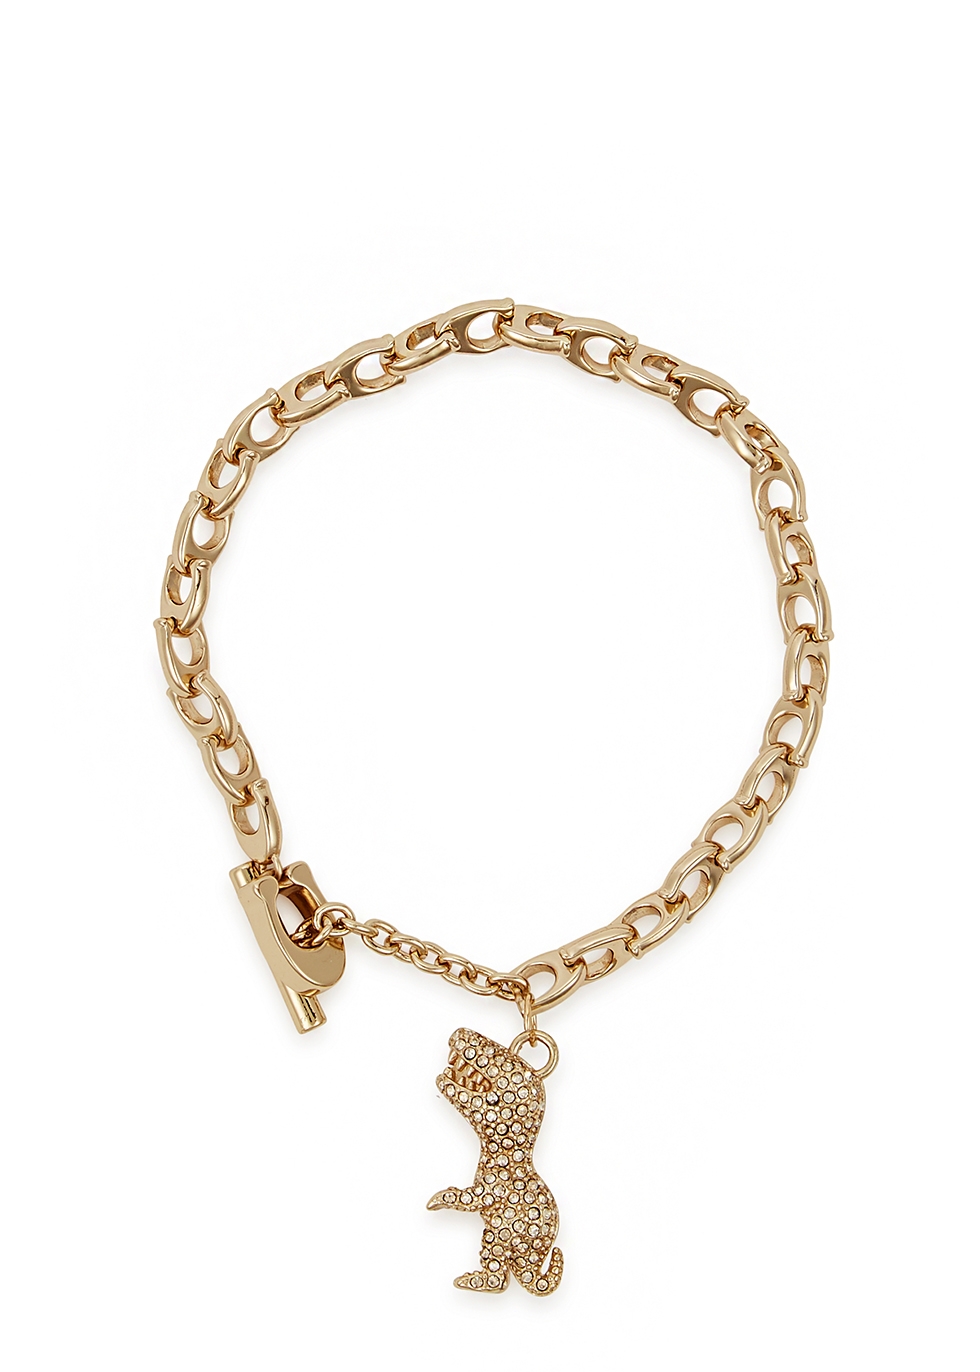 Rexy embellished gold-tone bracelet